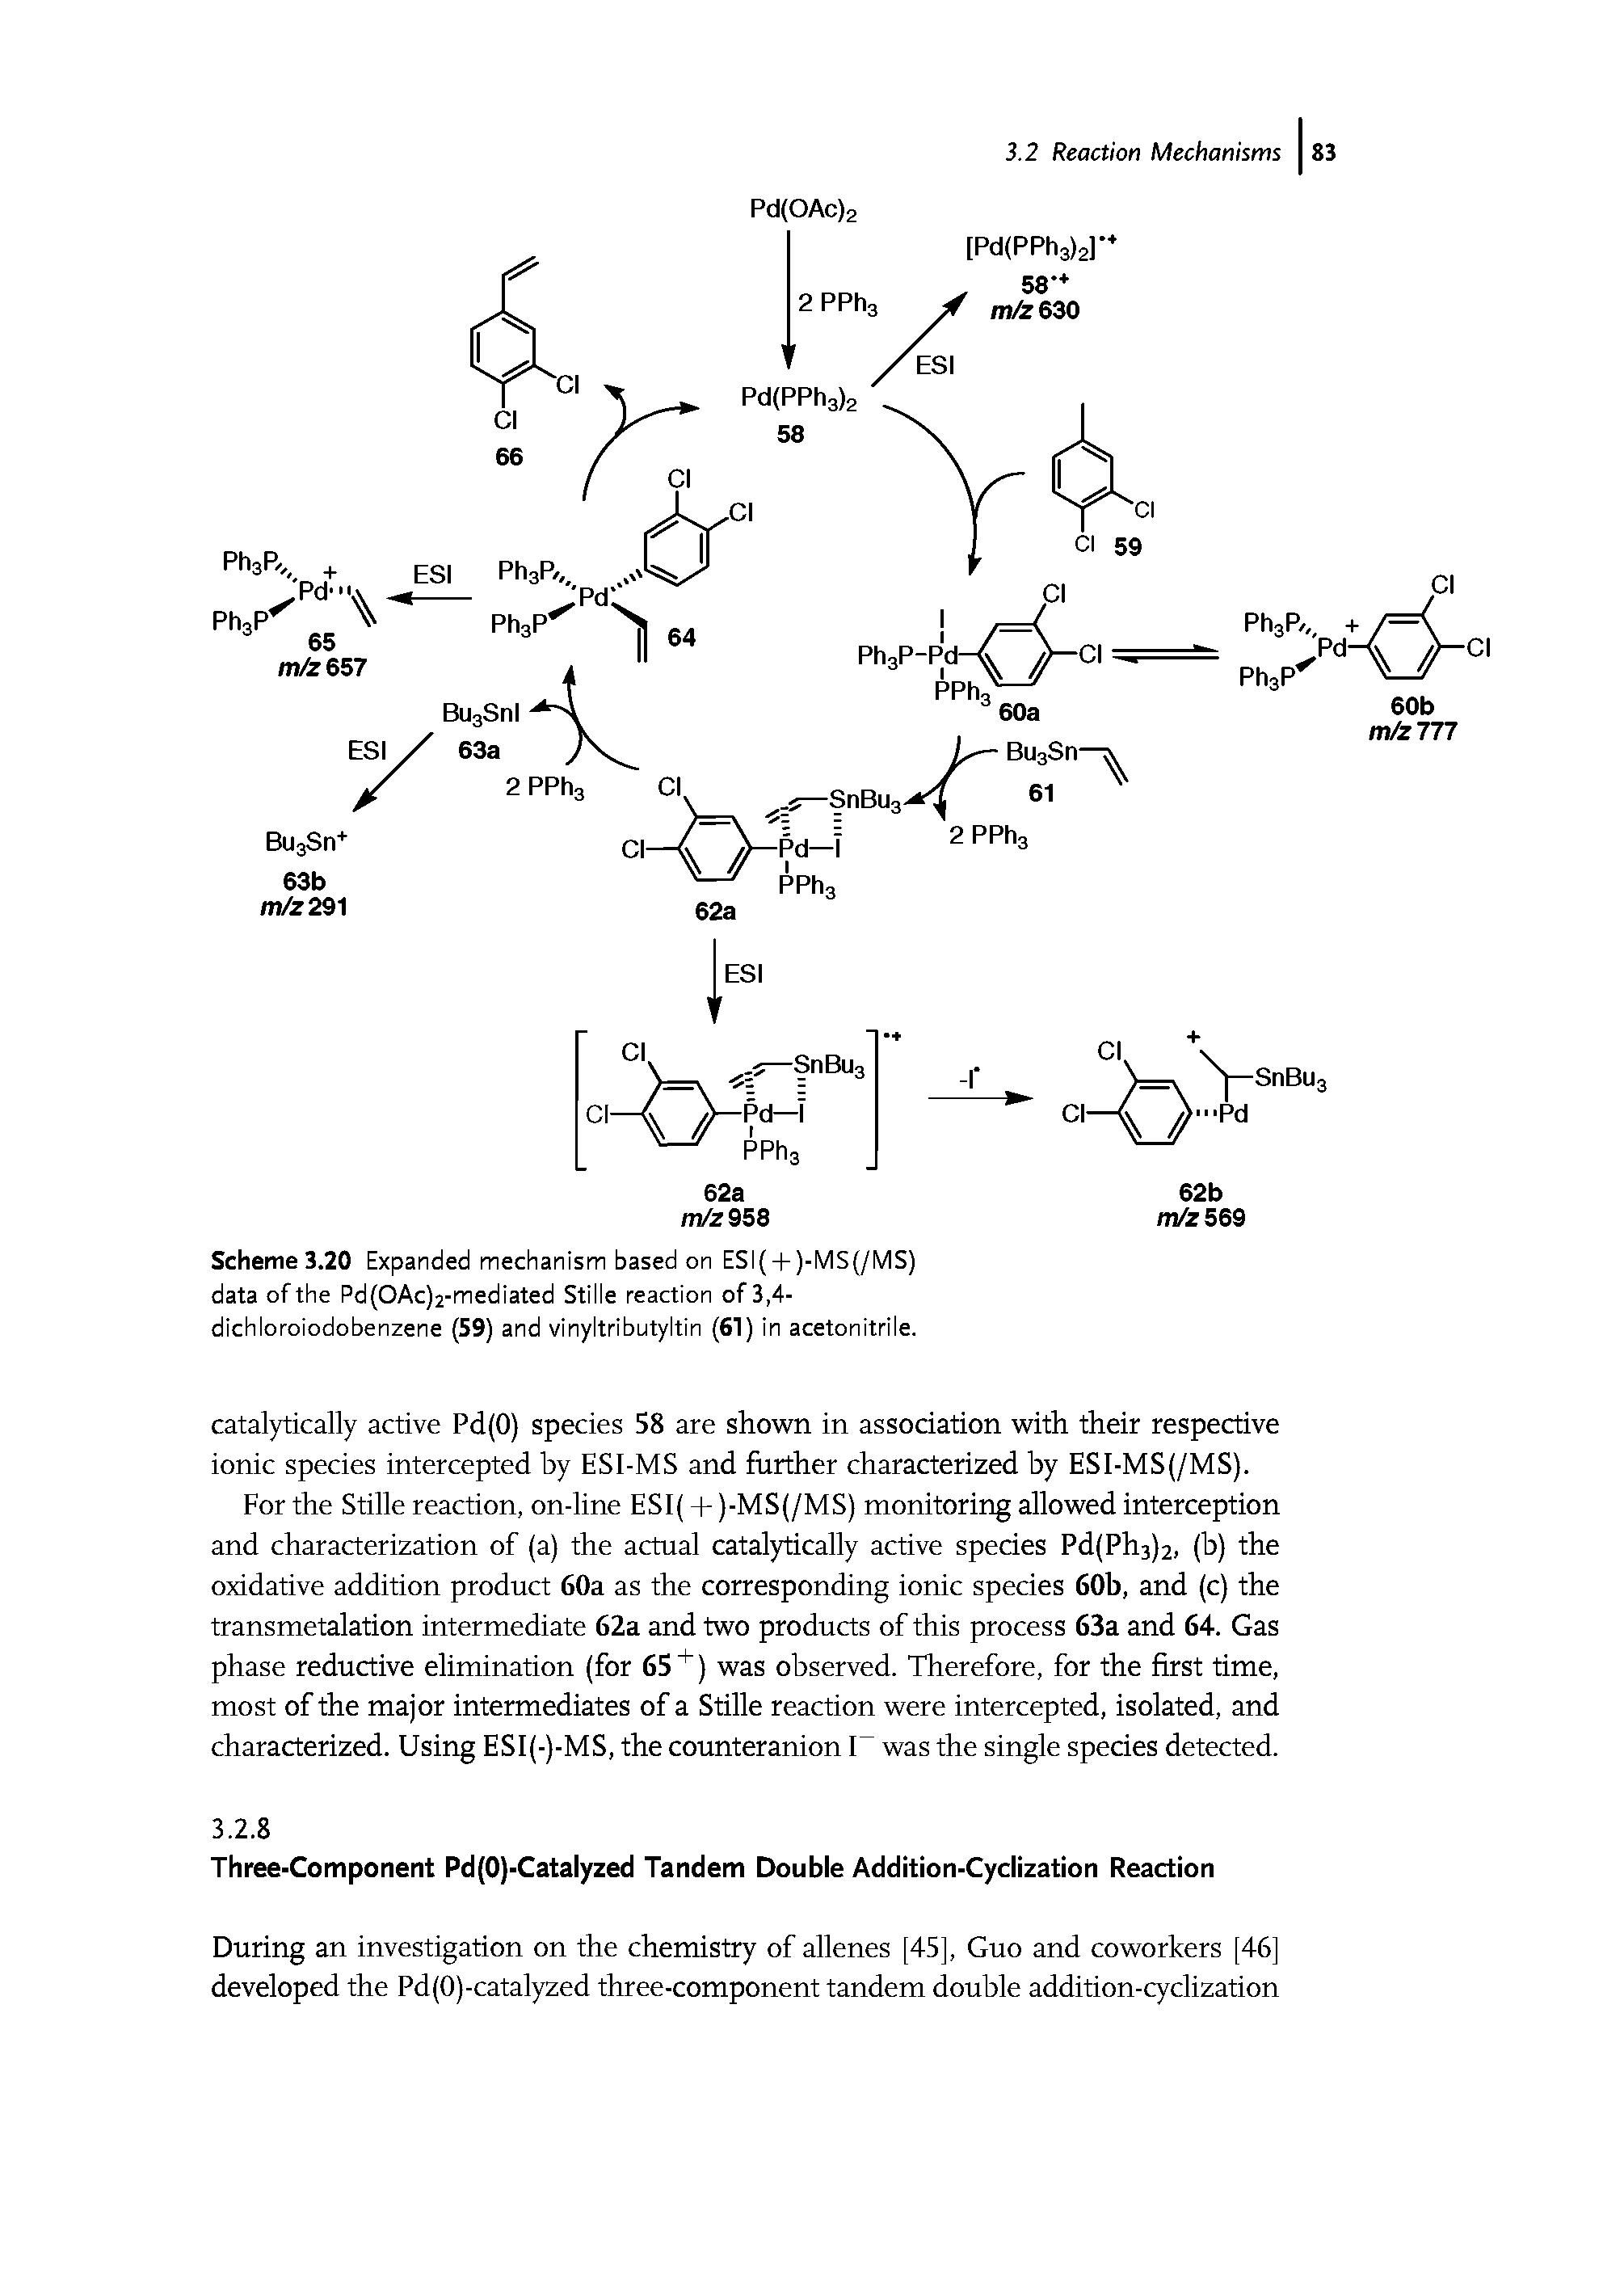 Scheme 3.20 Expanded mechanism based on ESI( + )-MS(/MS) data of the Pd OAc)2-mediated Stille reaction of 3,4-dichloroiodobenzene (59) and vinyltributyltin (61) in acetonitrile.